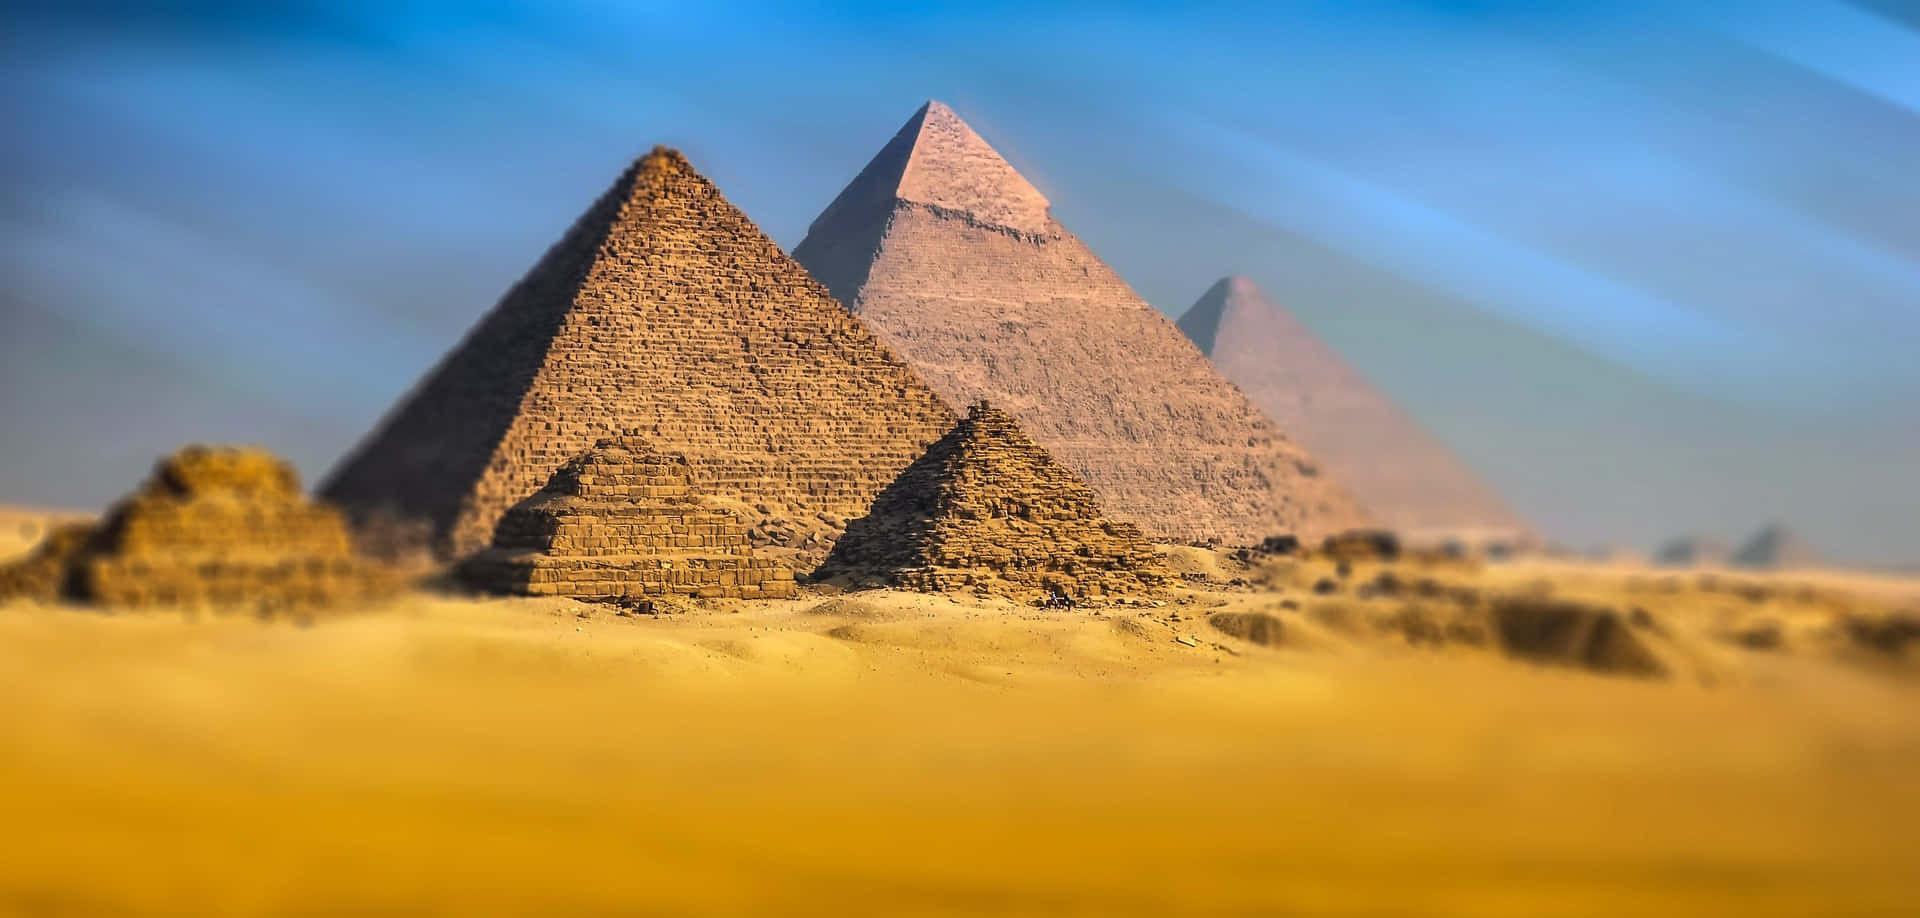 A Photo Of The Pyramids Of Giza